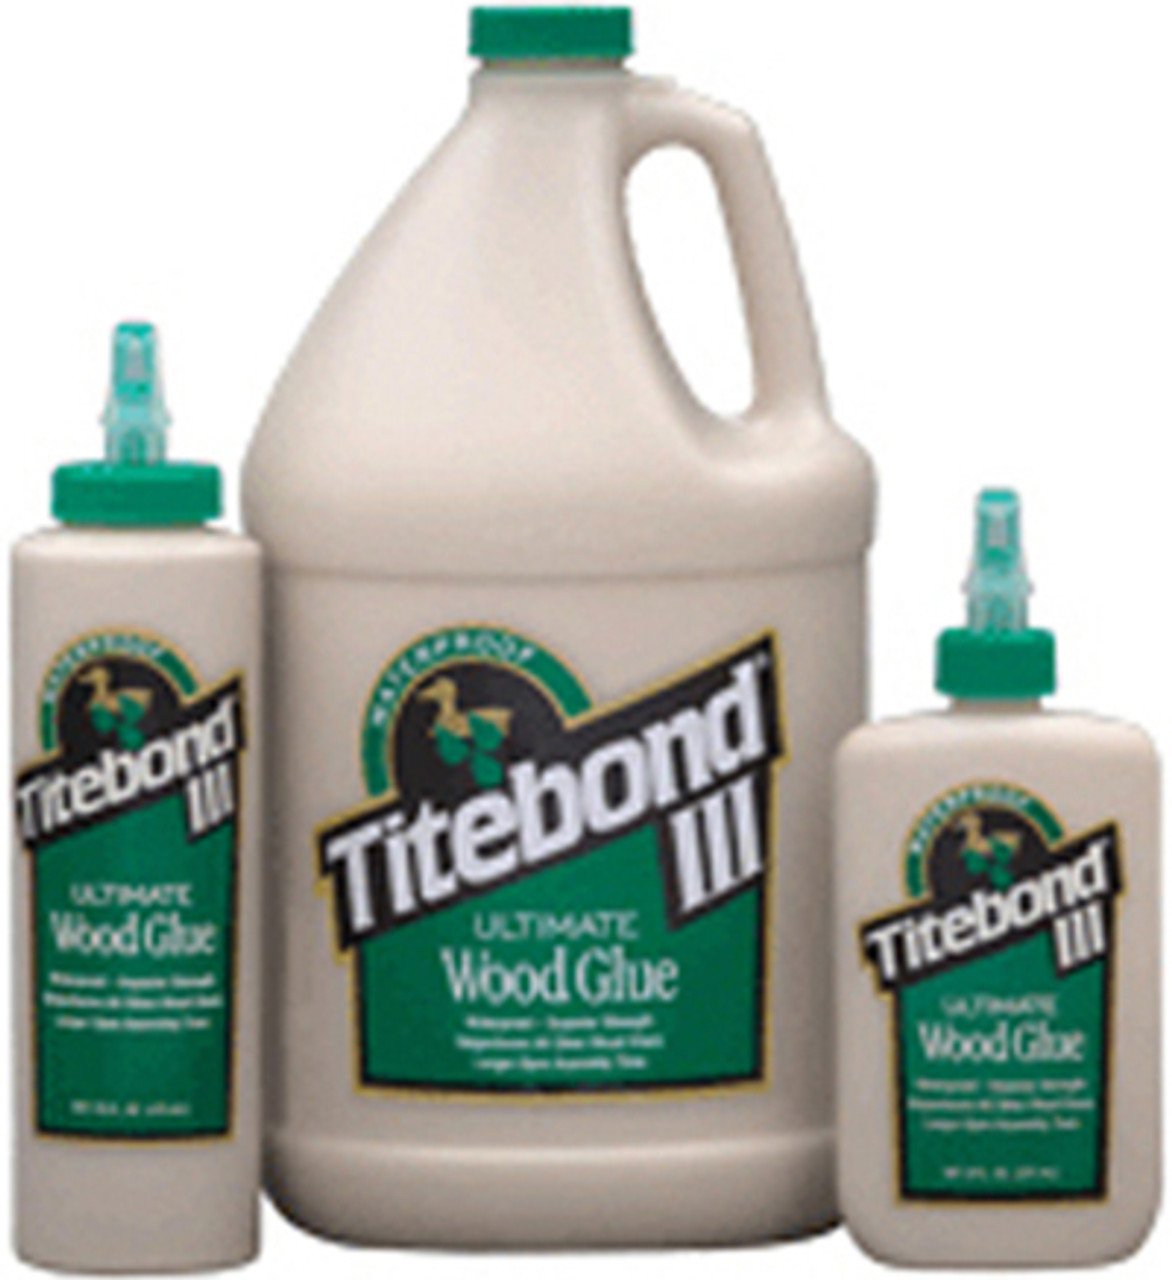 Titebond III Ultimate Wood Glue - Bottle Quart